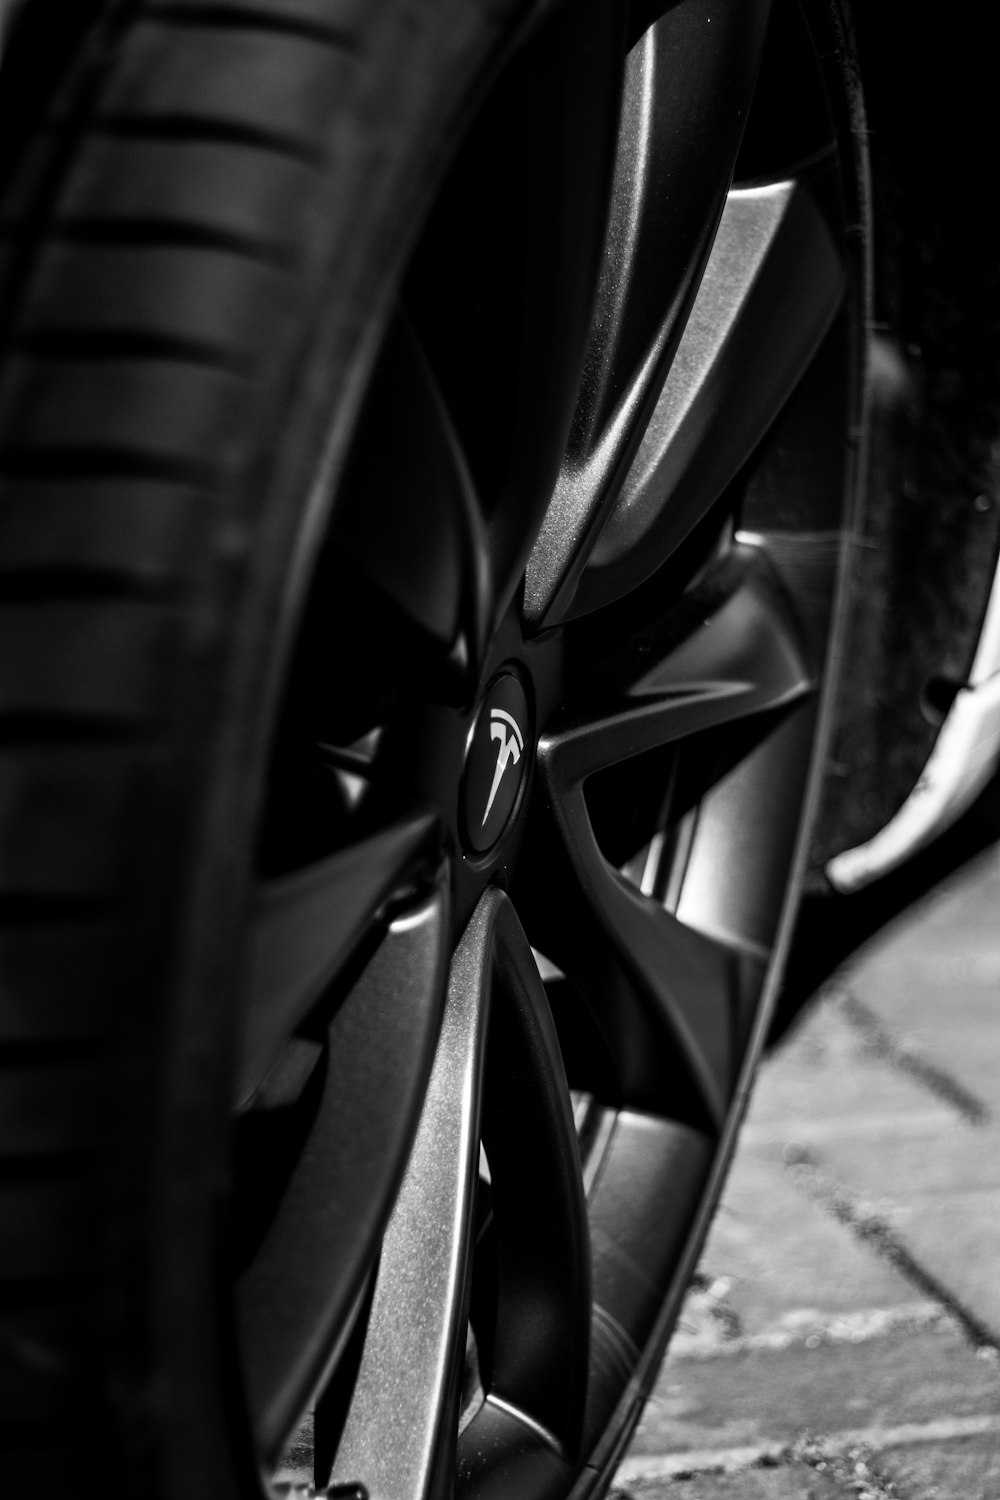 black and silver car wheel